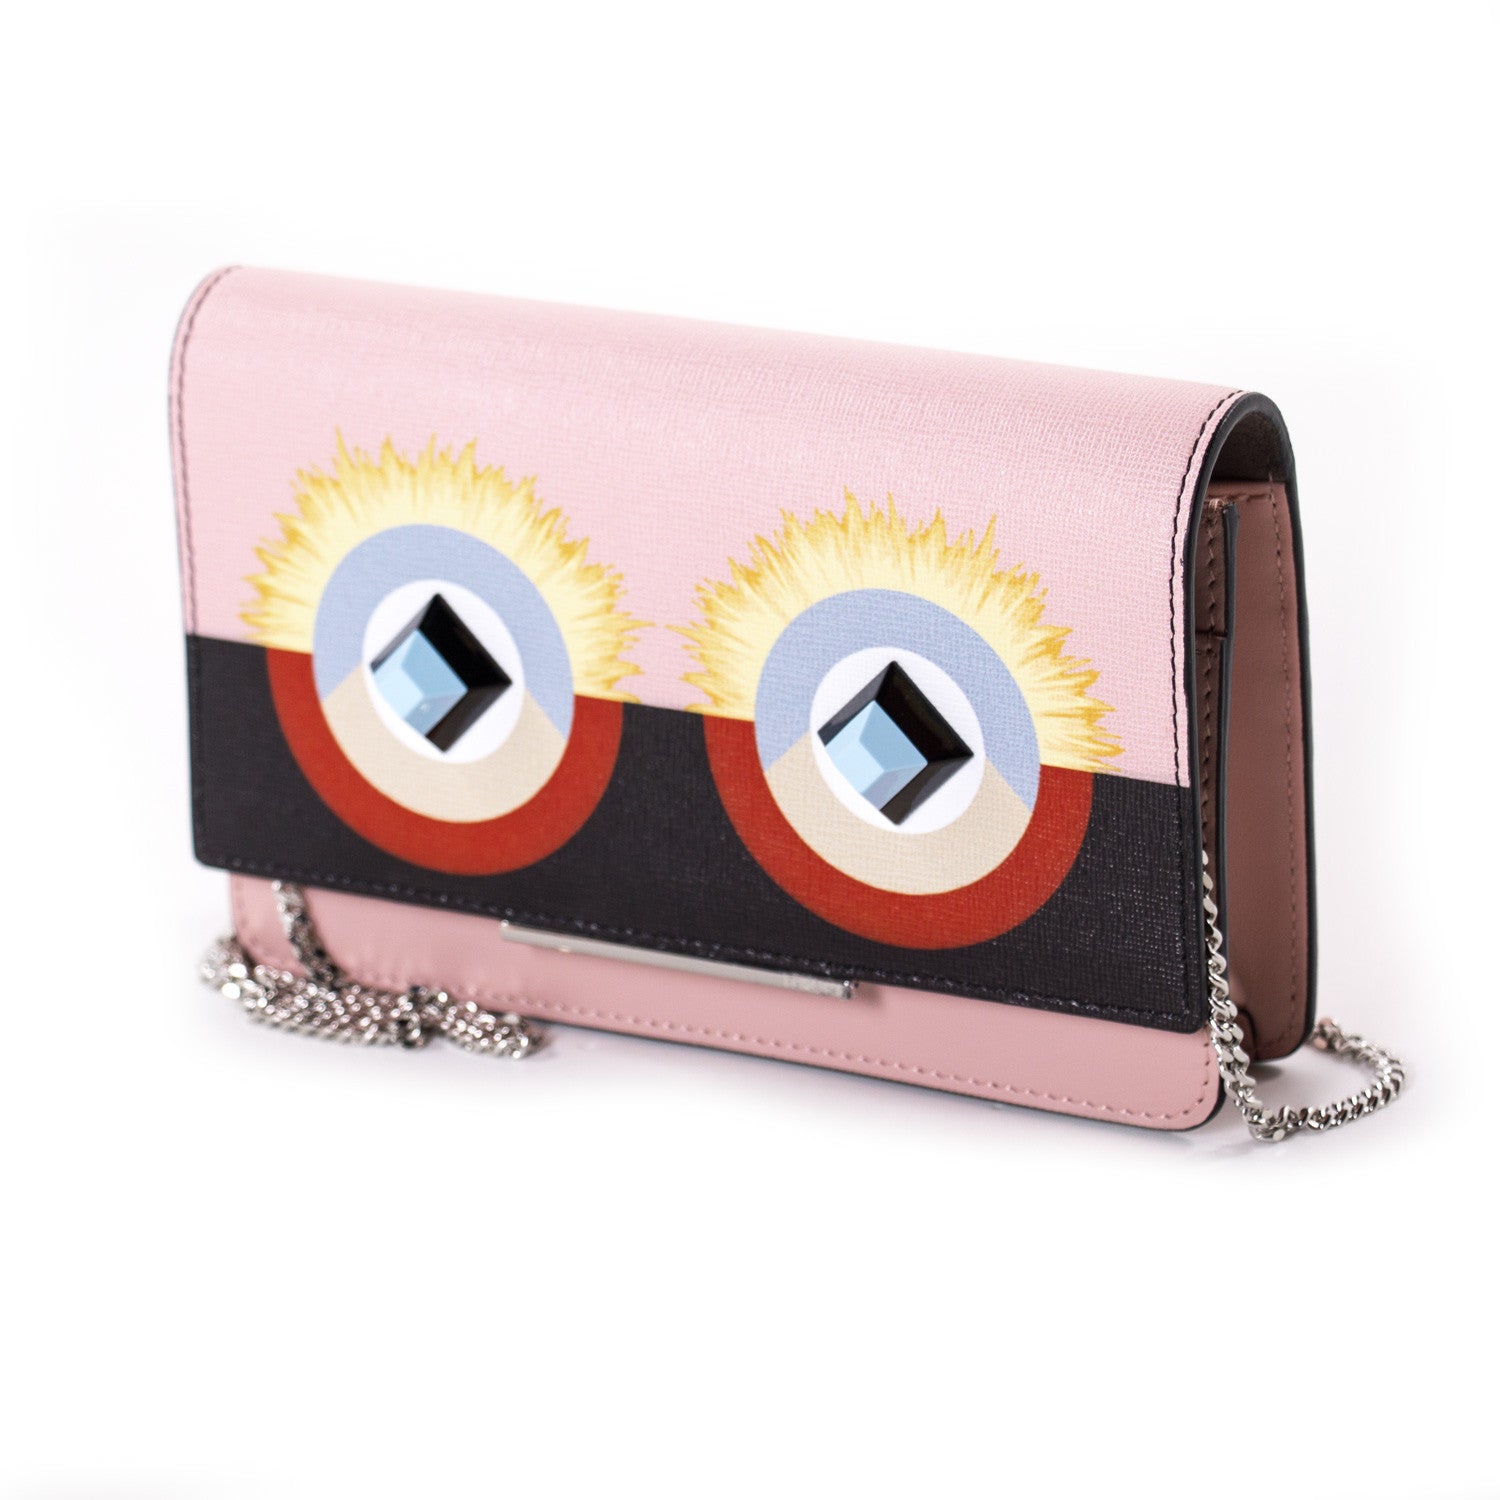 Shop authentic Fendi Wallet On Chain Shoulder Bag at revogue for just ...